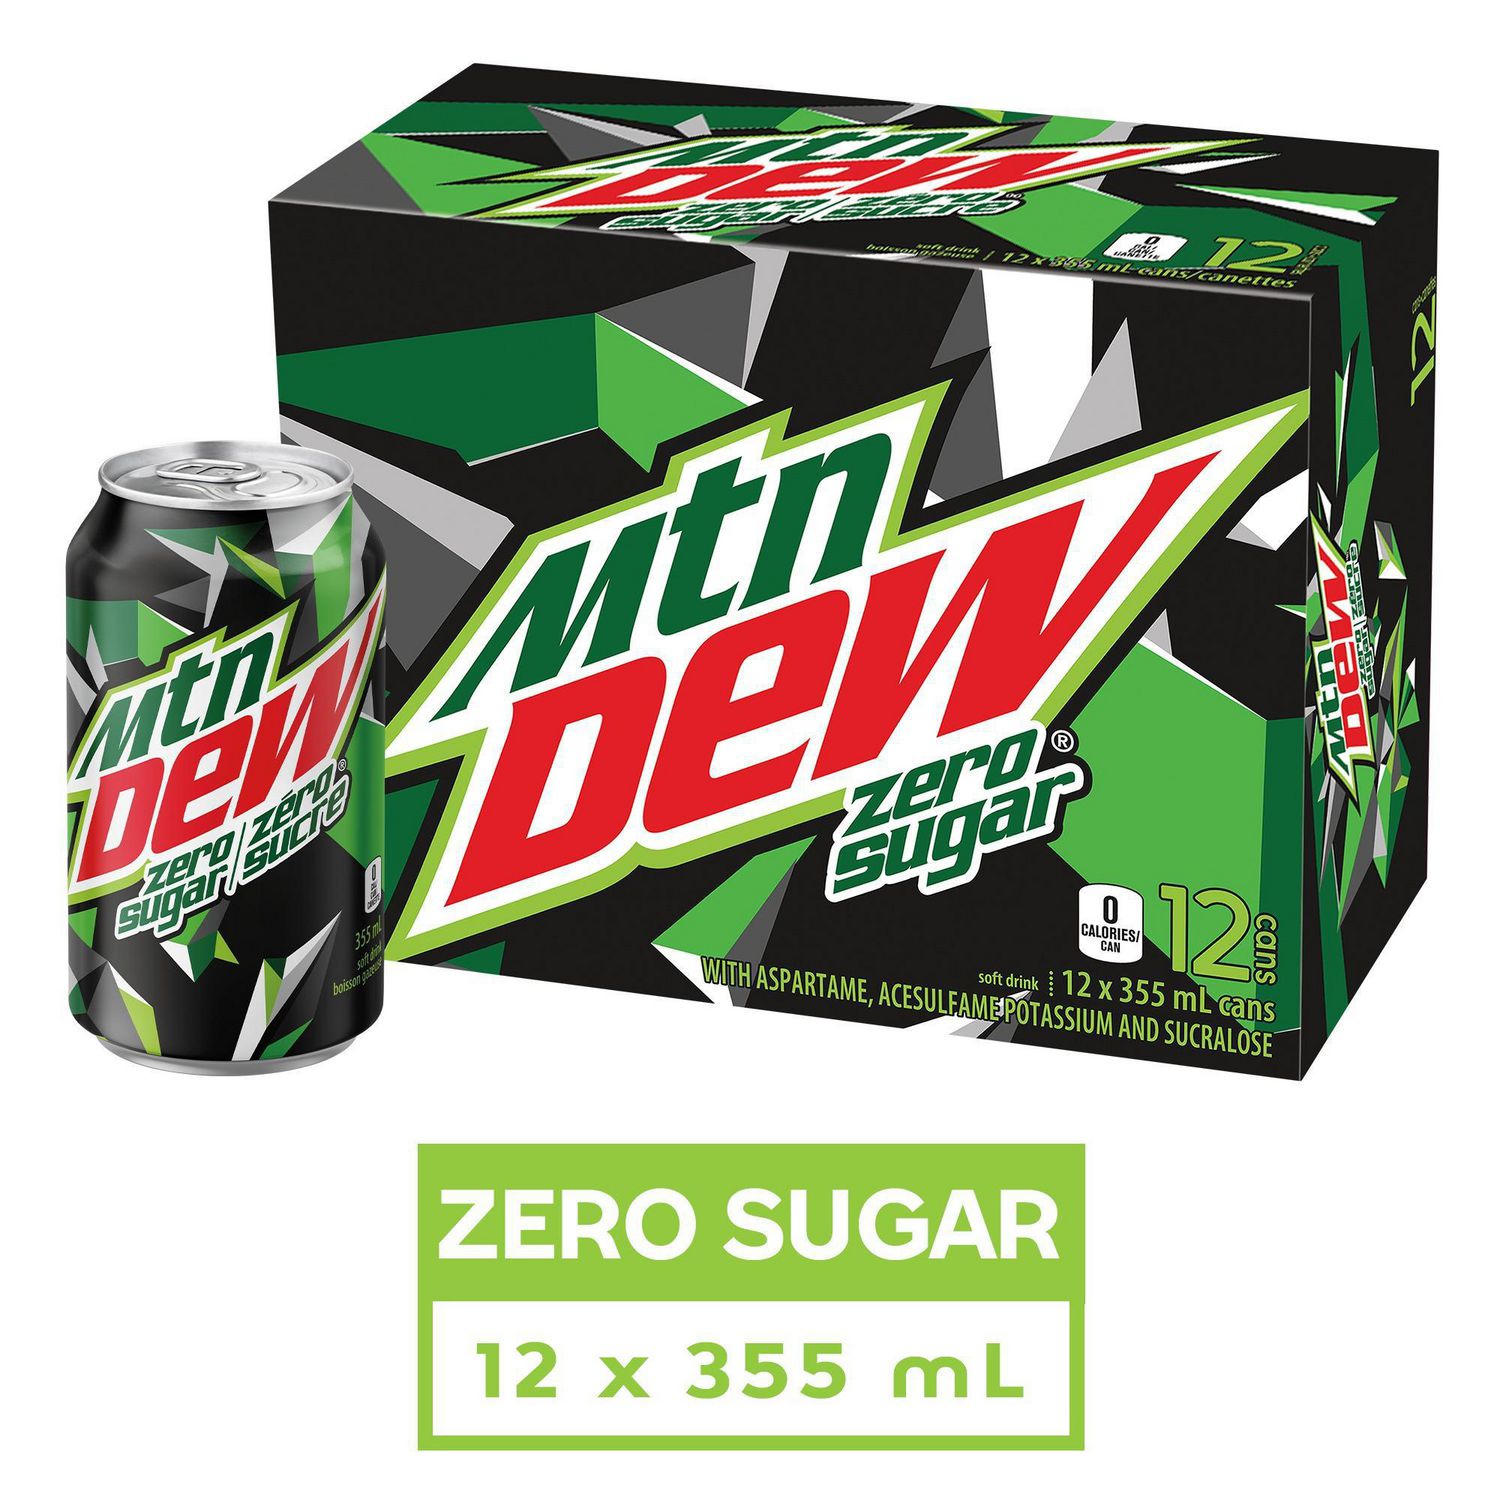 mtn dew energy drink